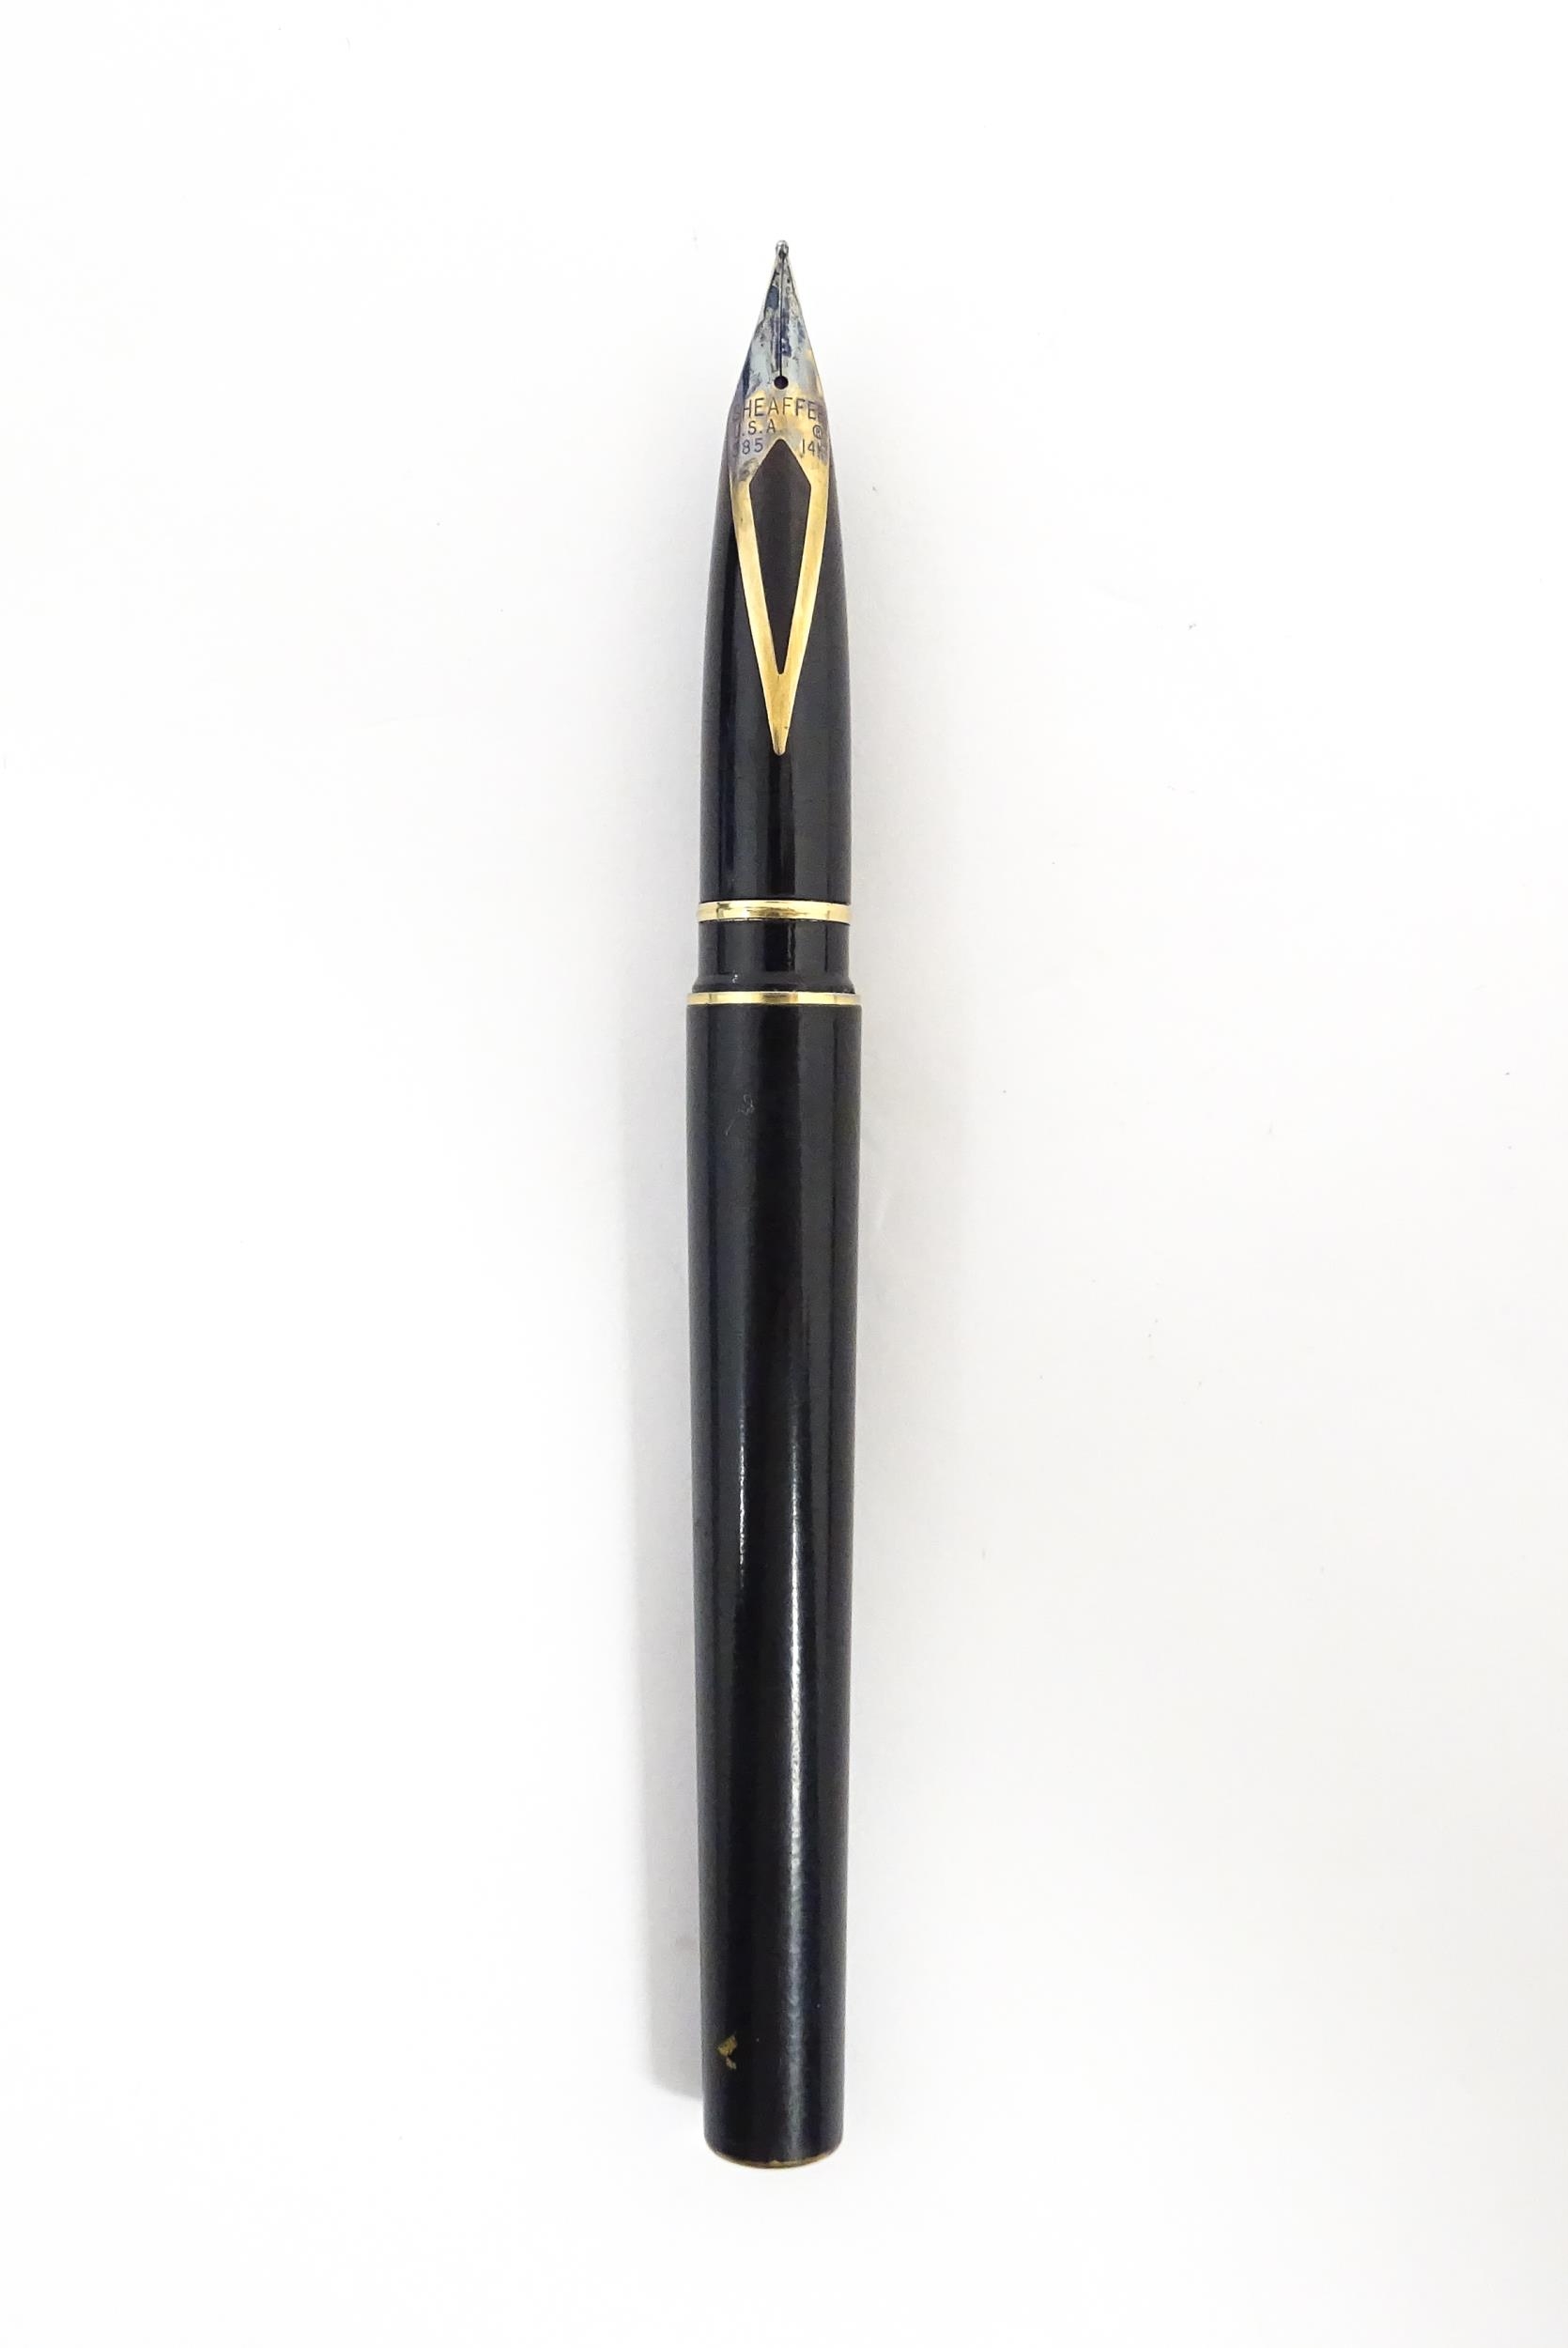 A Schaeffer 'Targa' fountain pen, with black barrel and cap, 14k gold nib, approx 5 3/8" long Please - Image 7 of 10